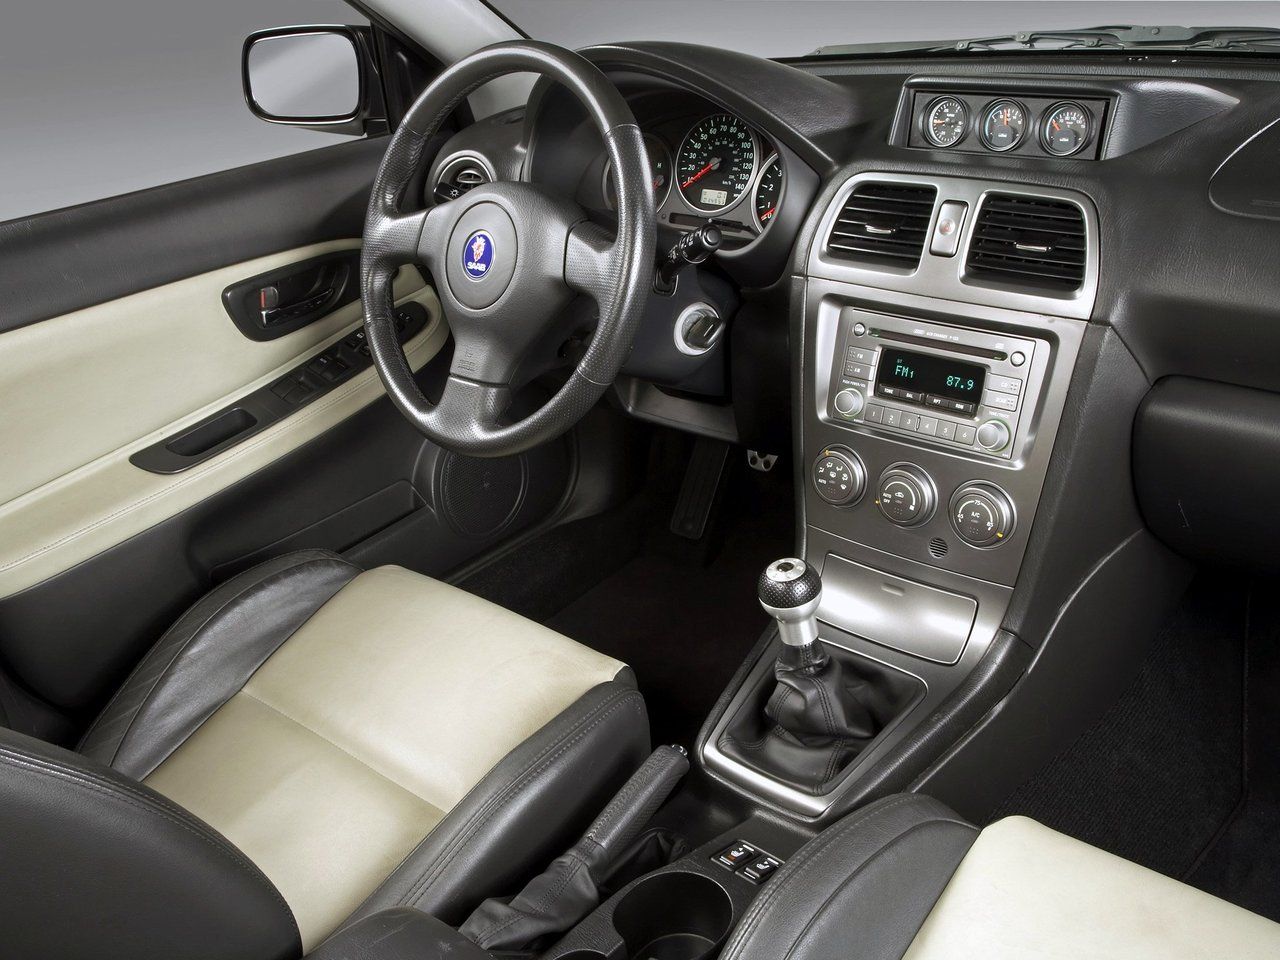 Saab 9-2x interior